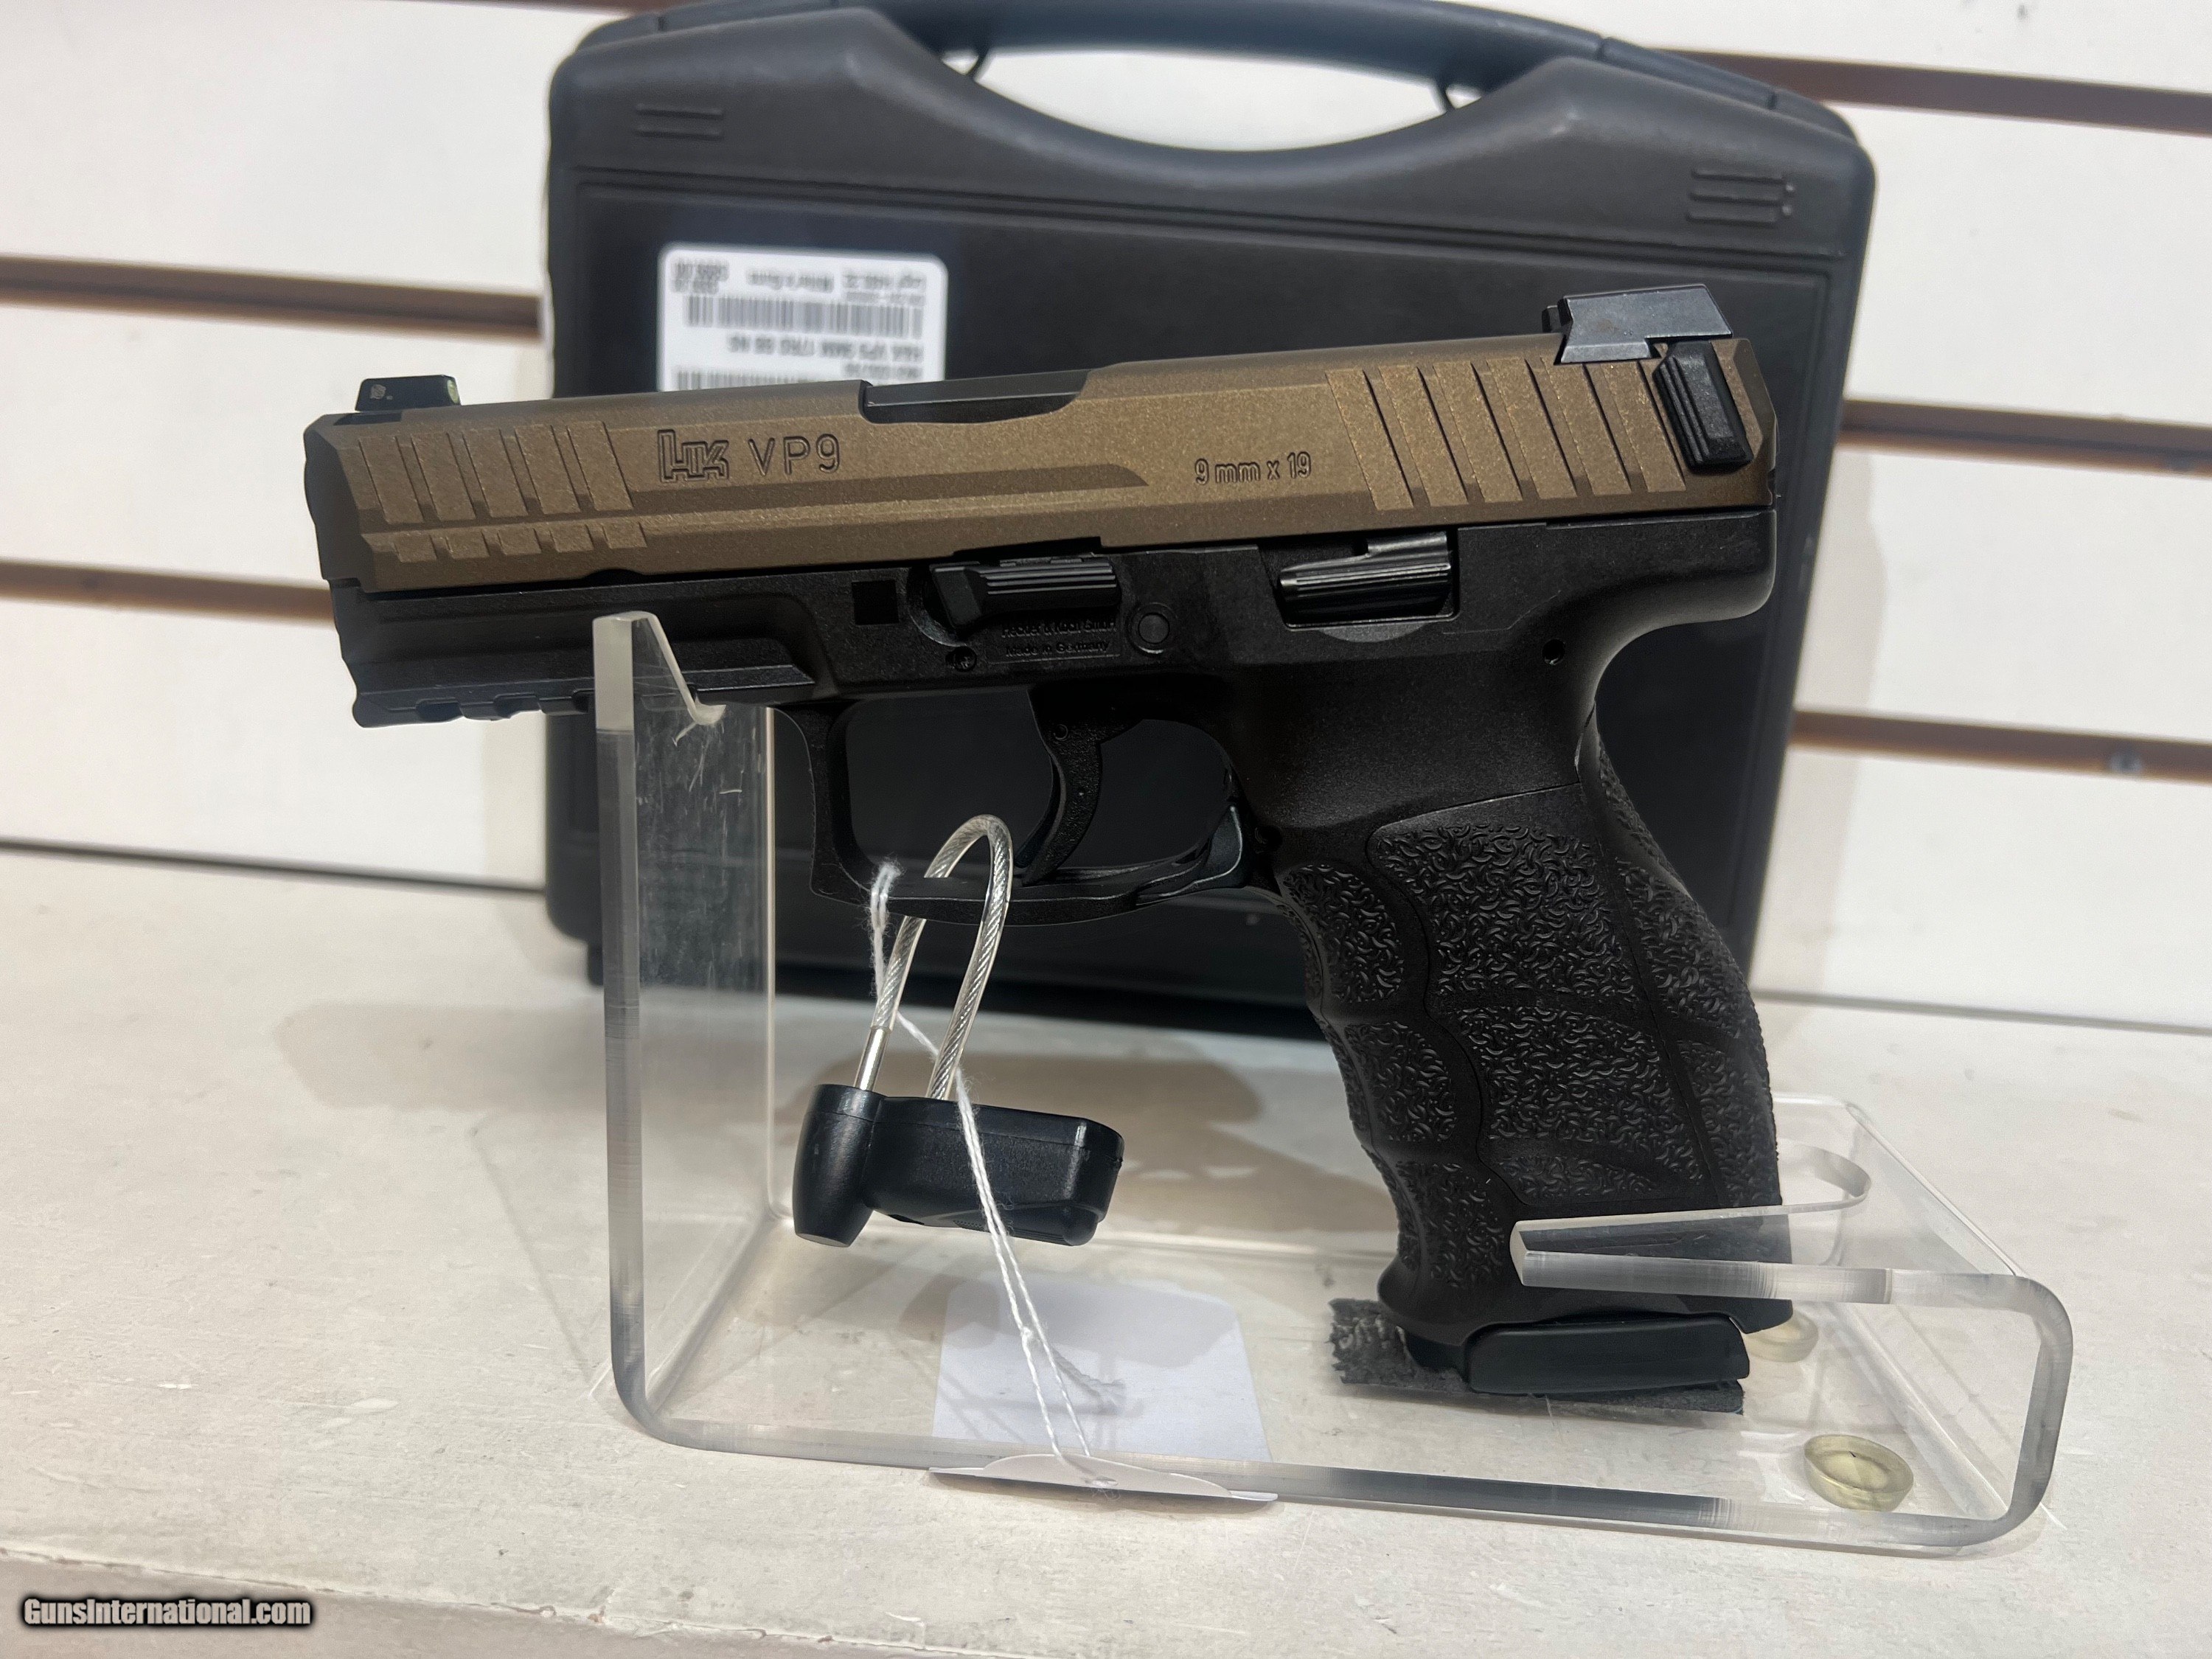 9mm Luger pistol cases to reload into ammunition